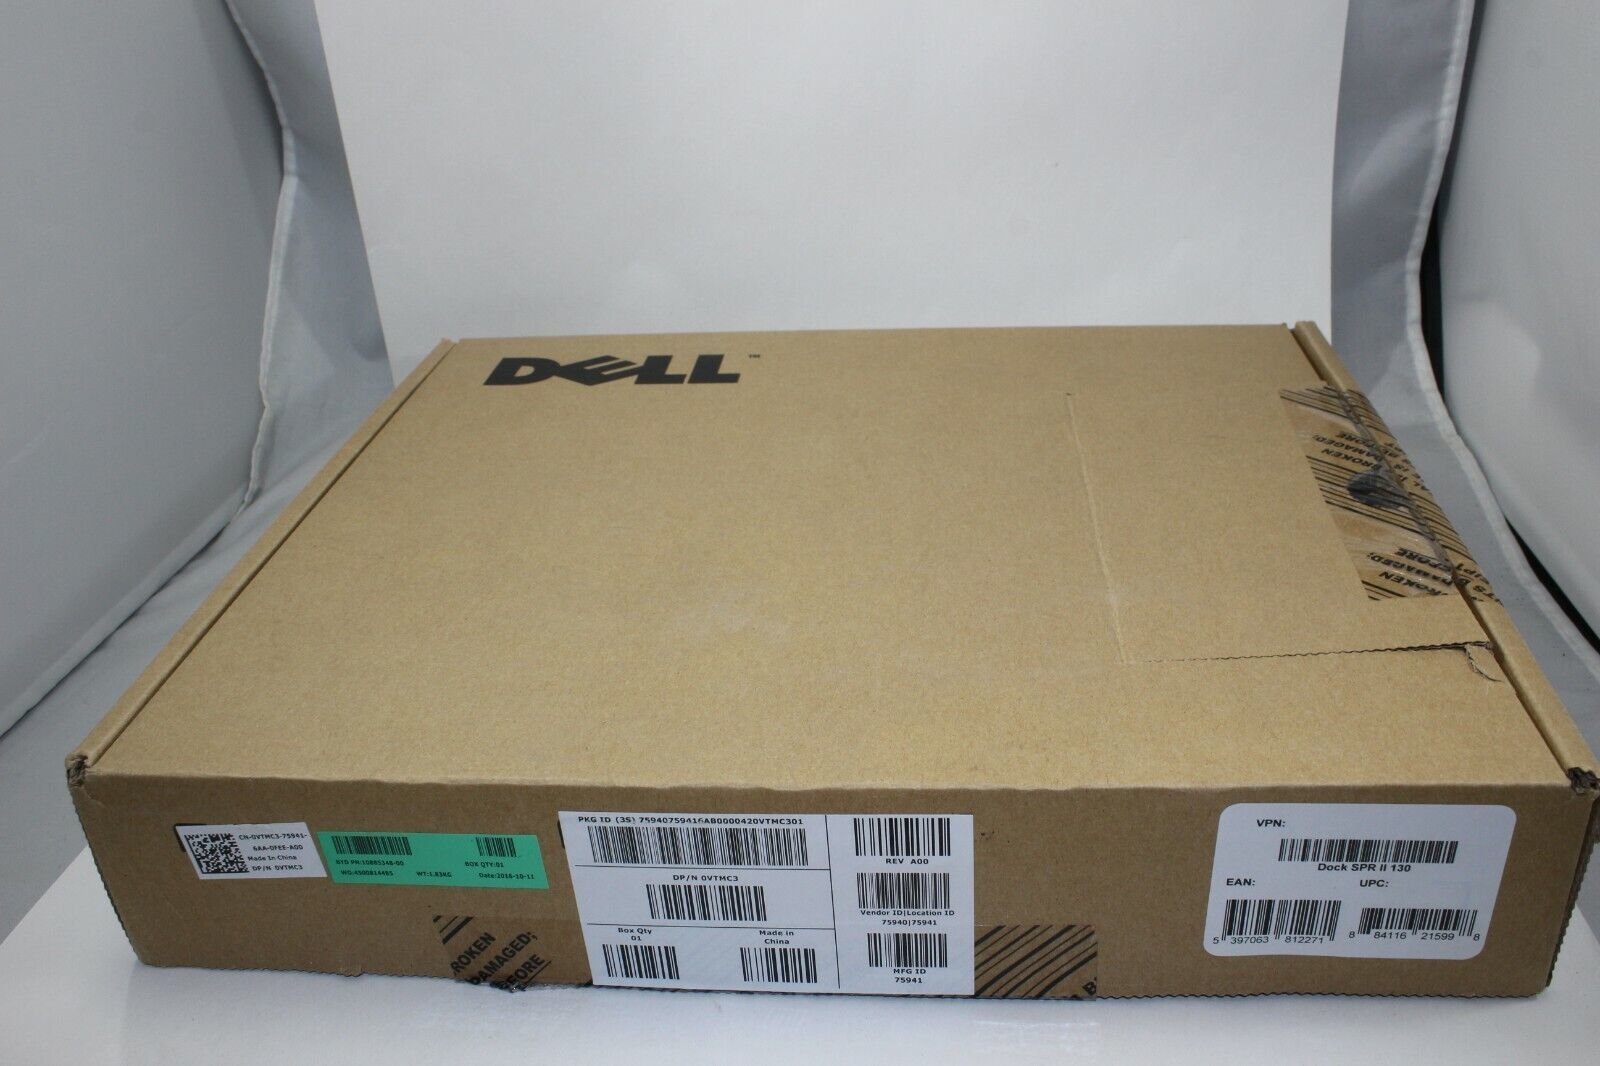 Dell VTMC3 Docking Station E-Port Replicator SPR II 130w USB OEM w Power Adapter - $44.95